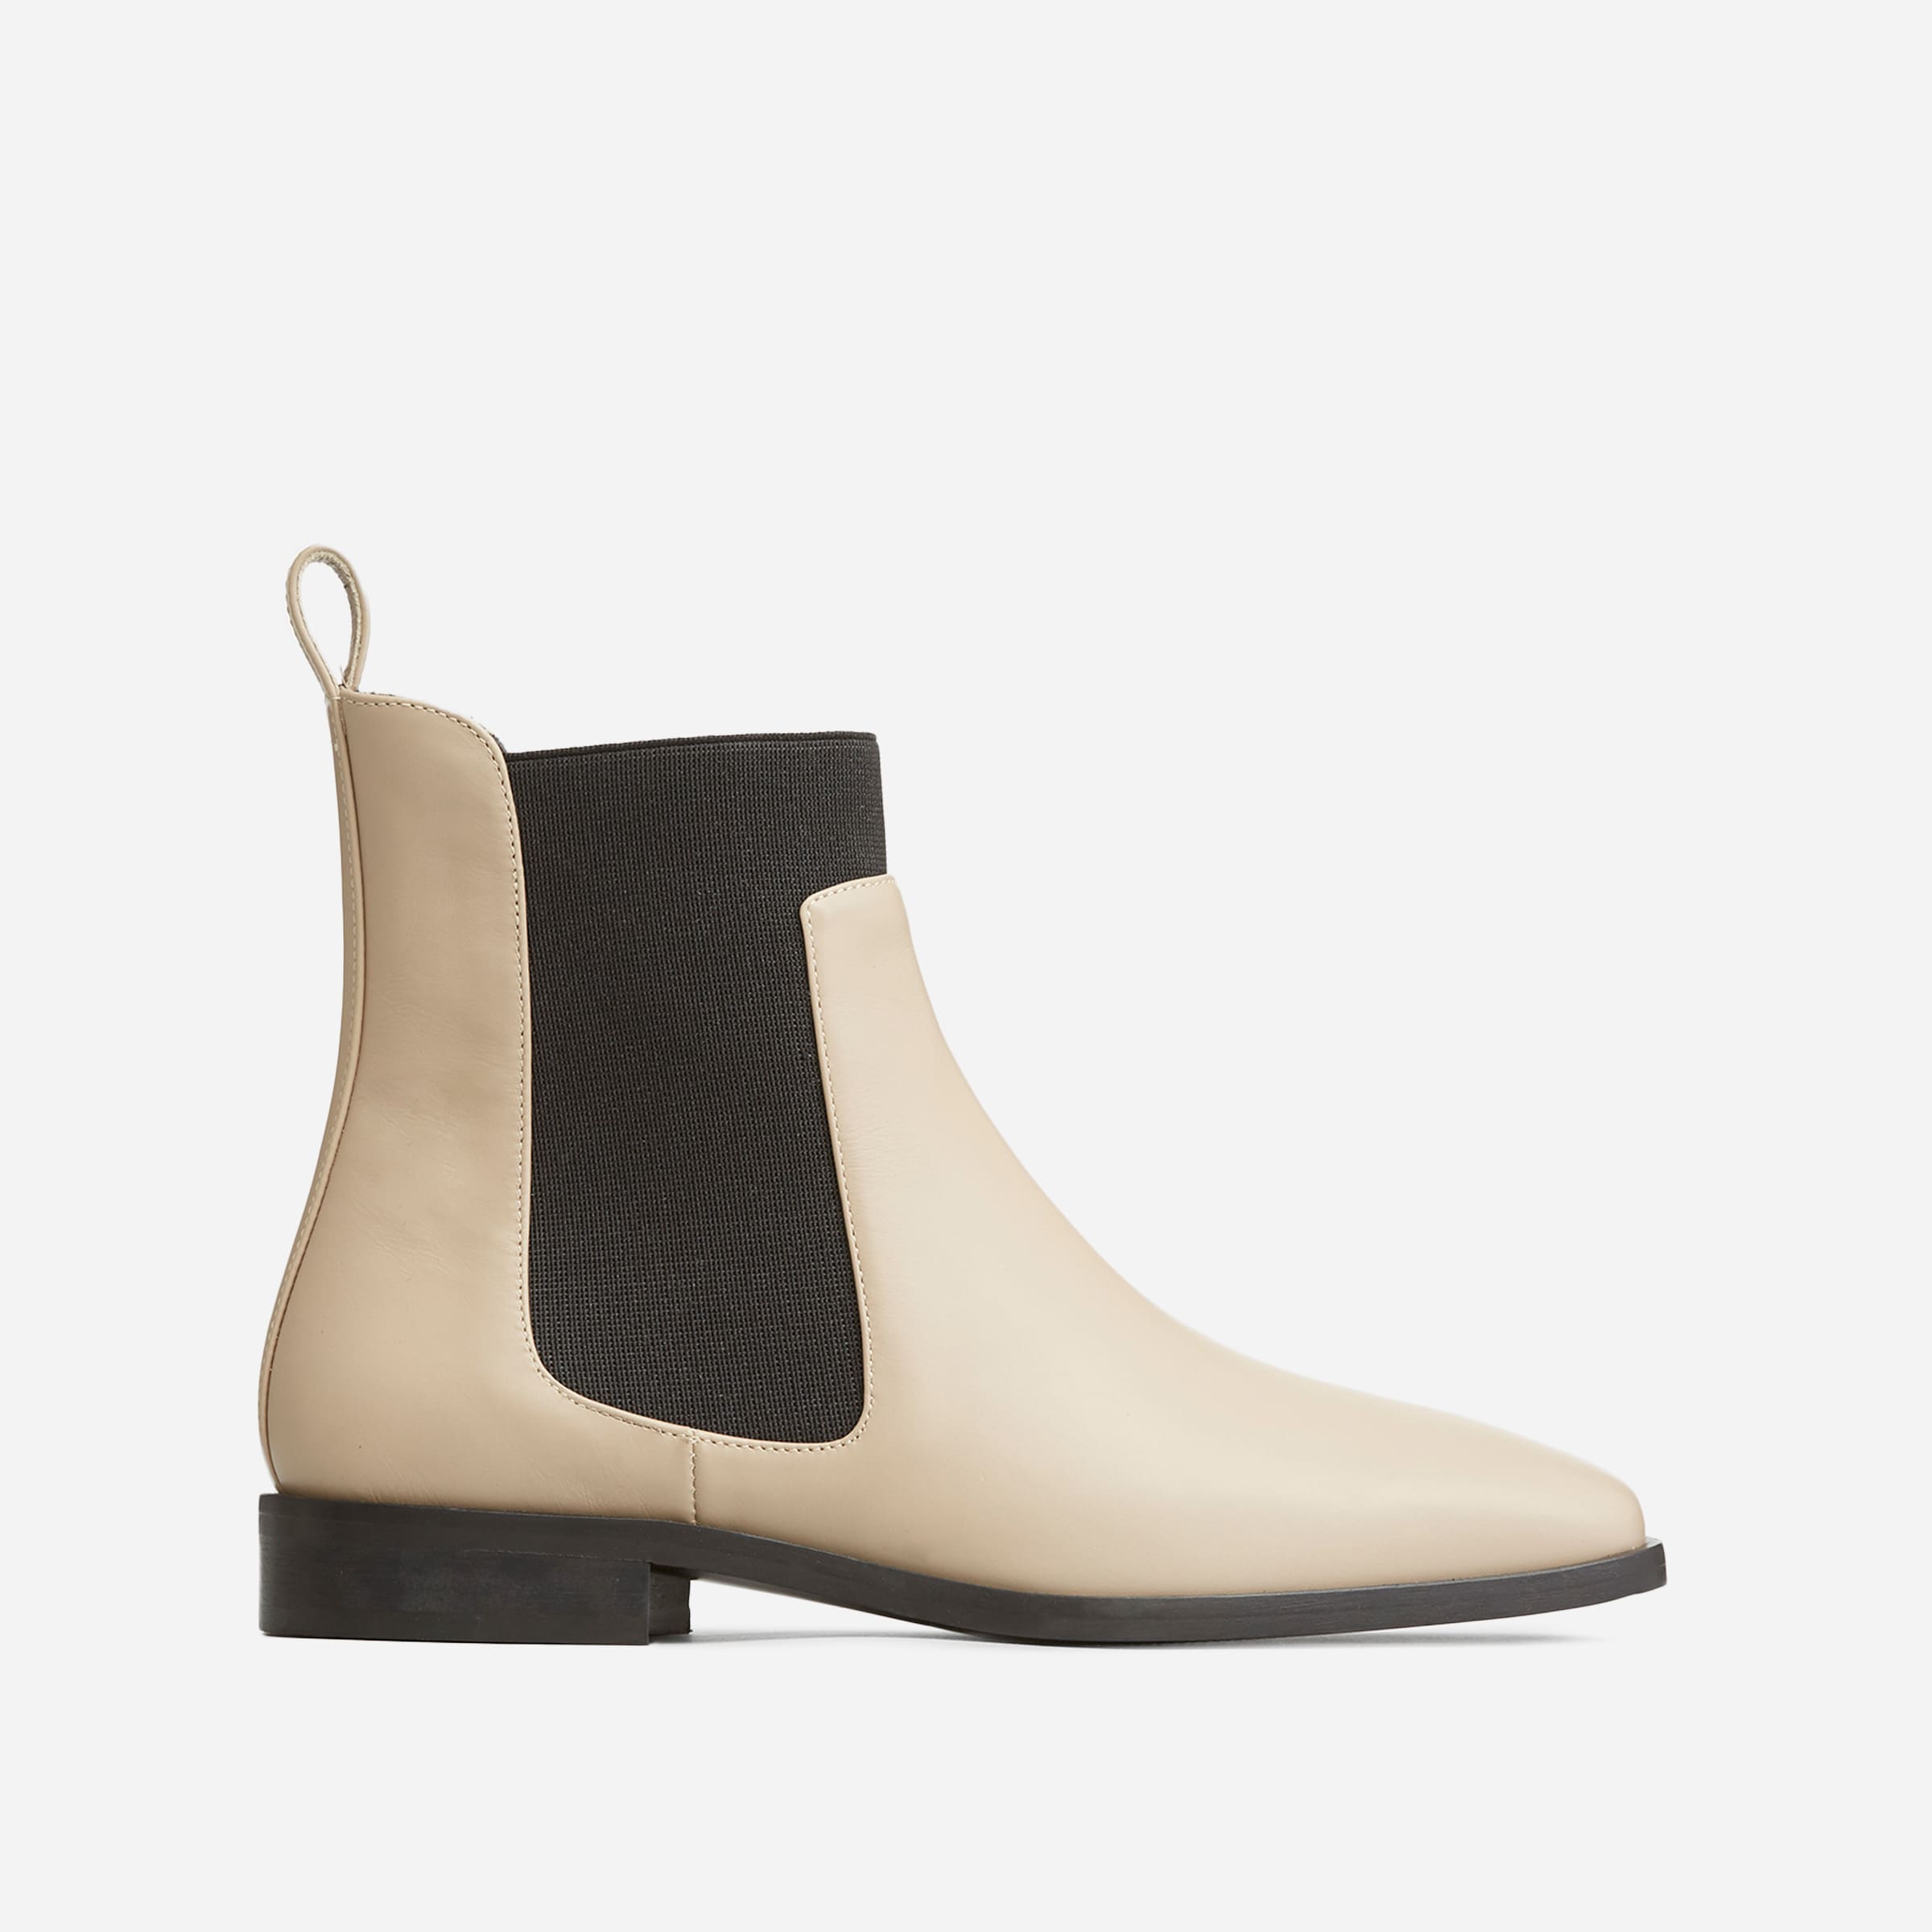 The Italian Leather Square Toe Chelsea Boot